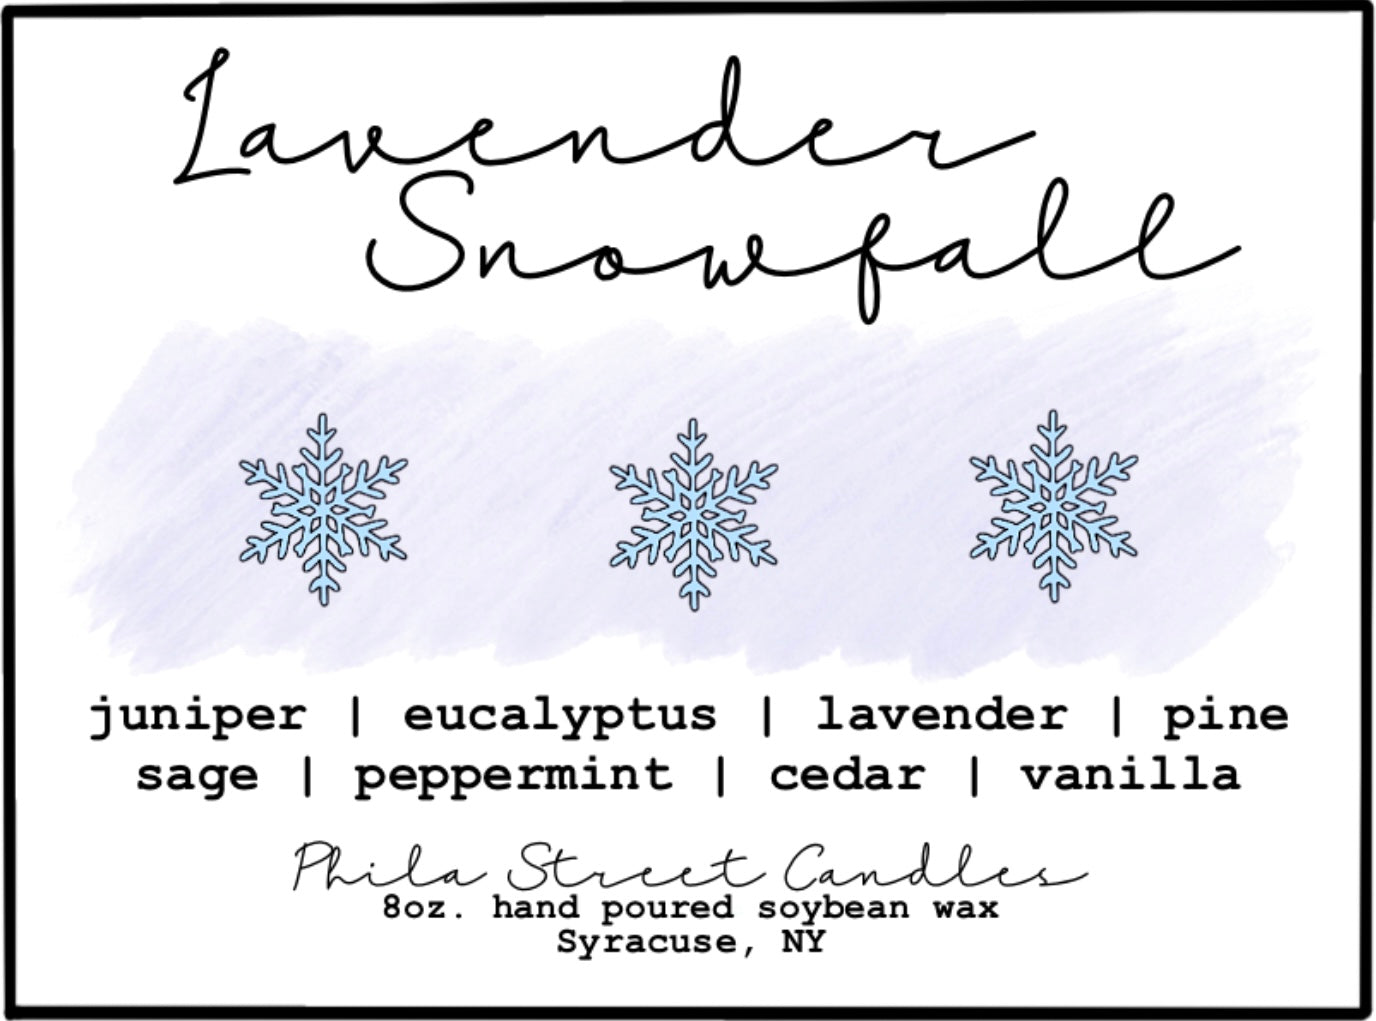 Lavender Snowfall